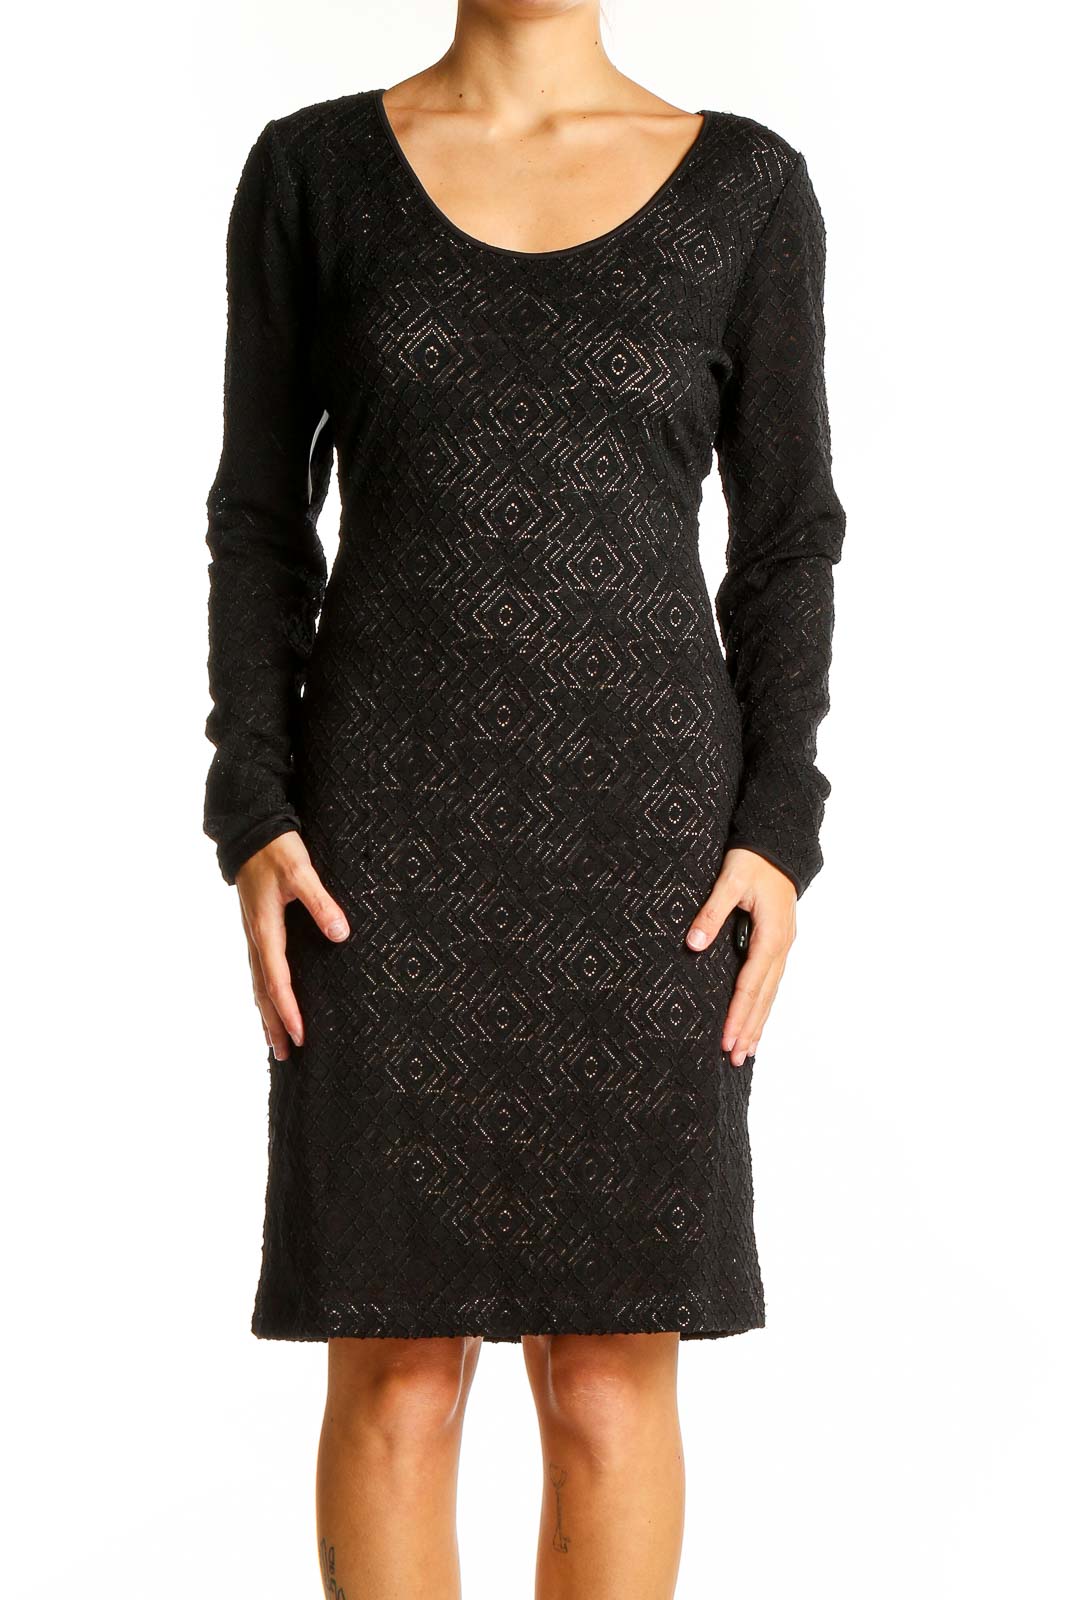 Black Texture Knit Dress Front